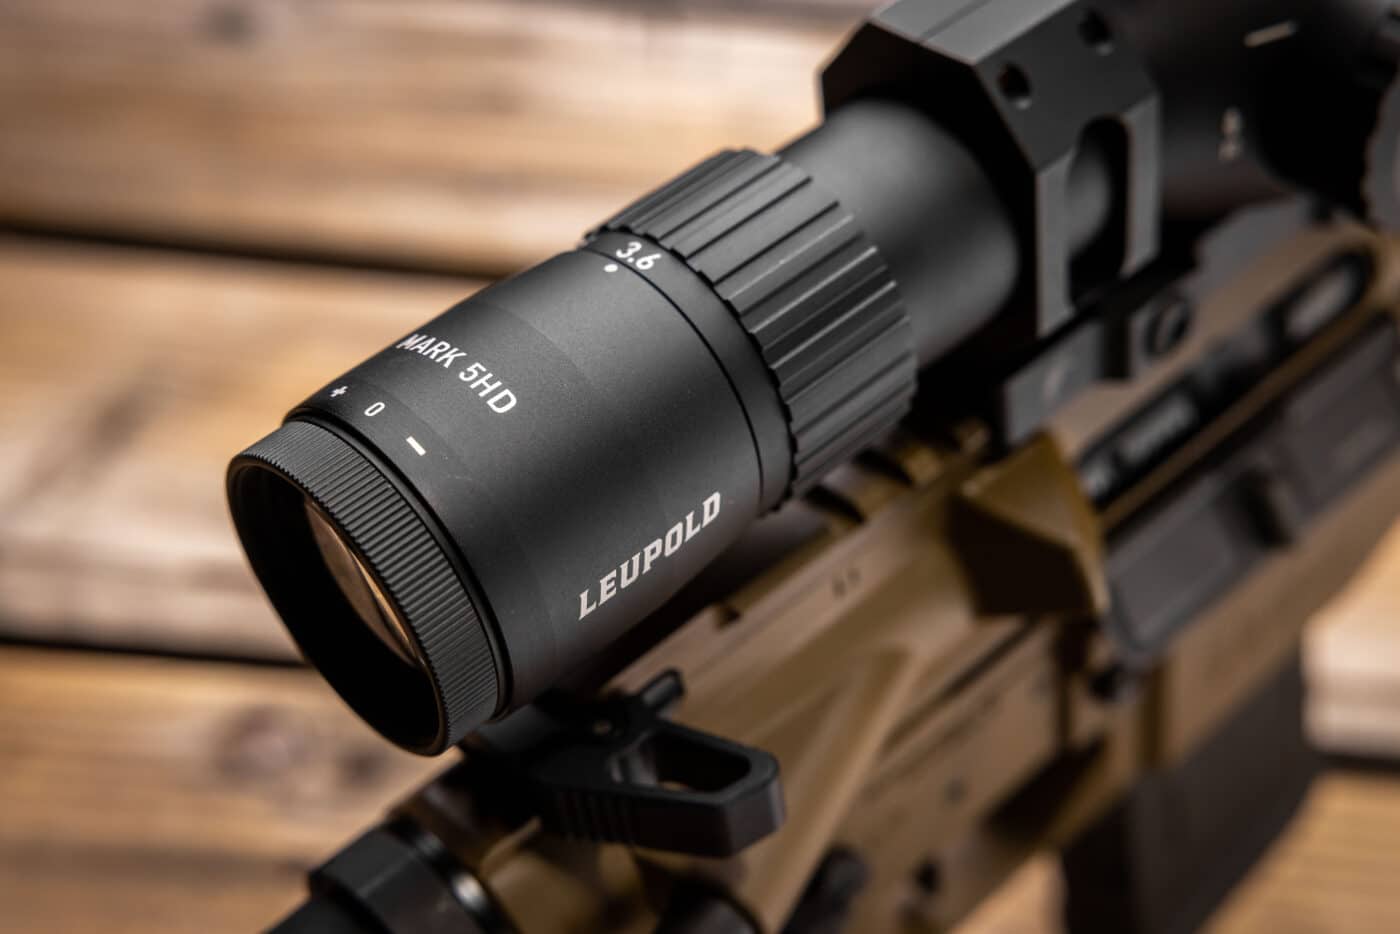 Leupold Mark 5HD scope magnification